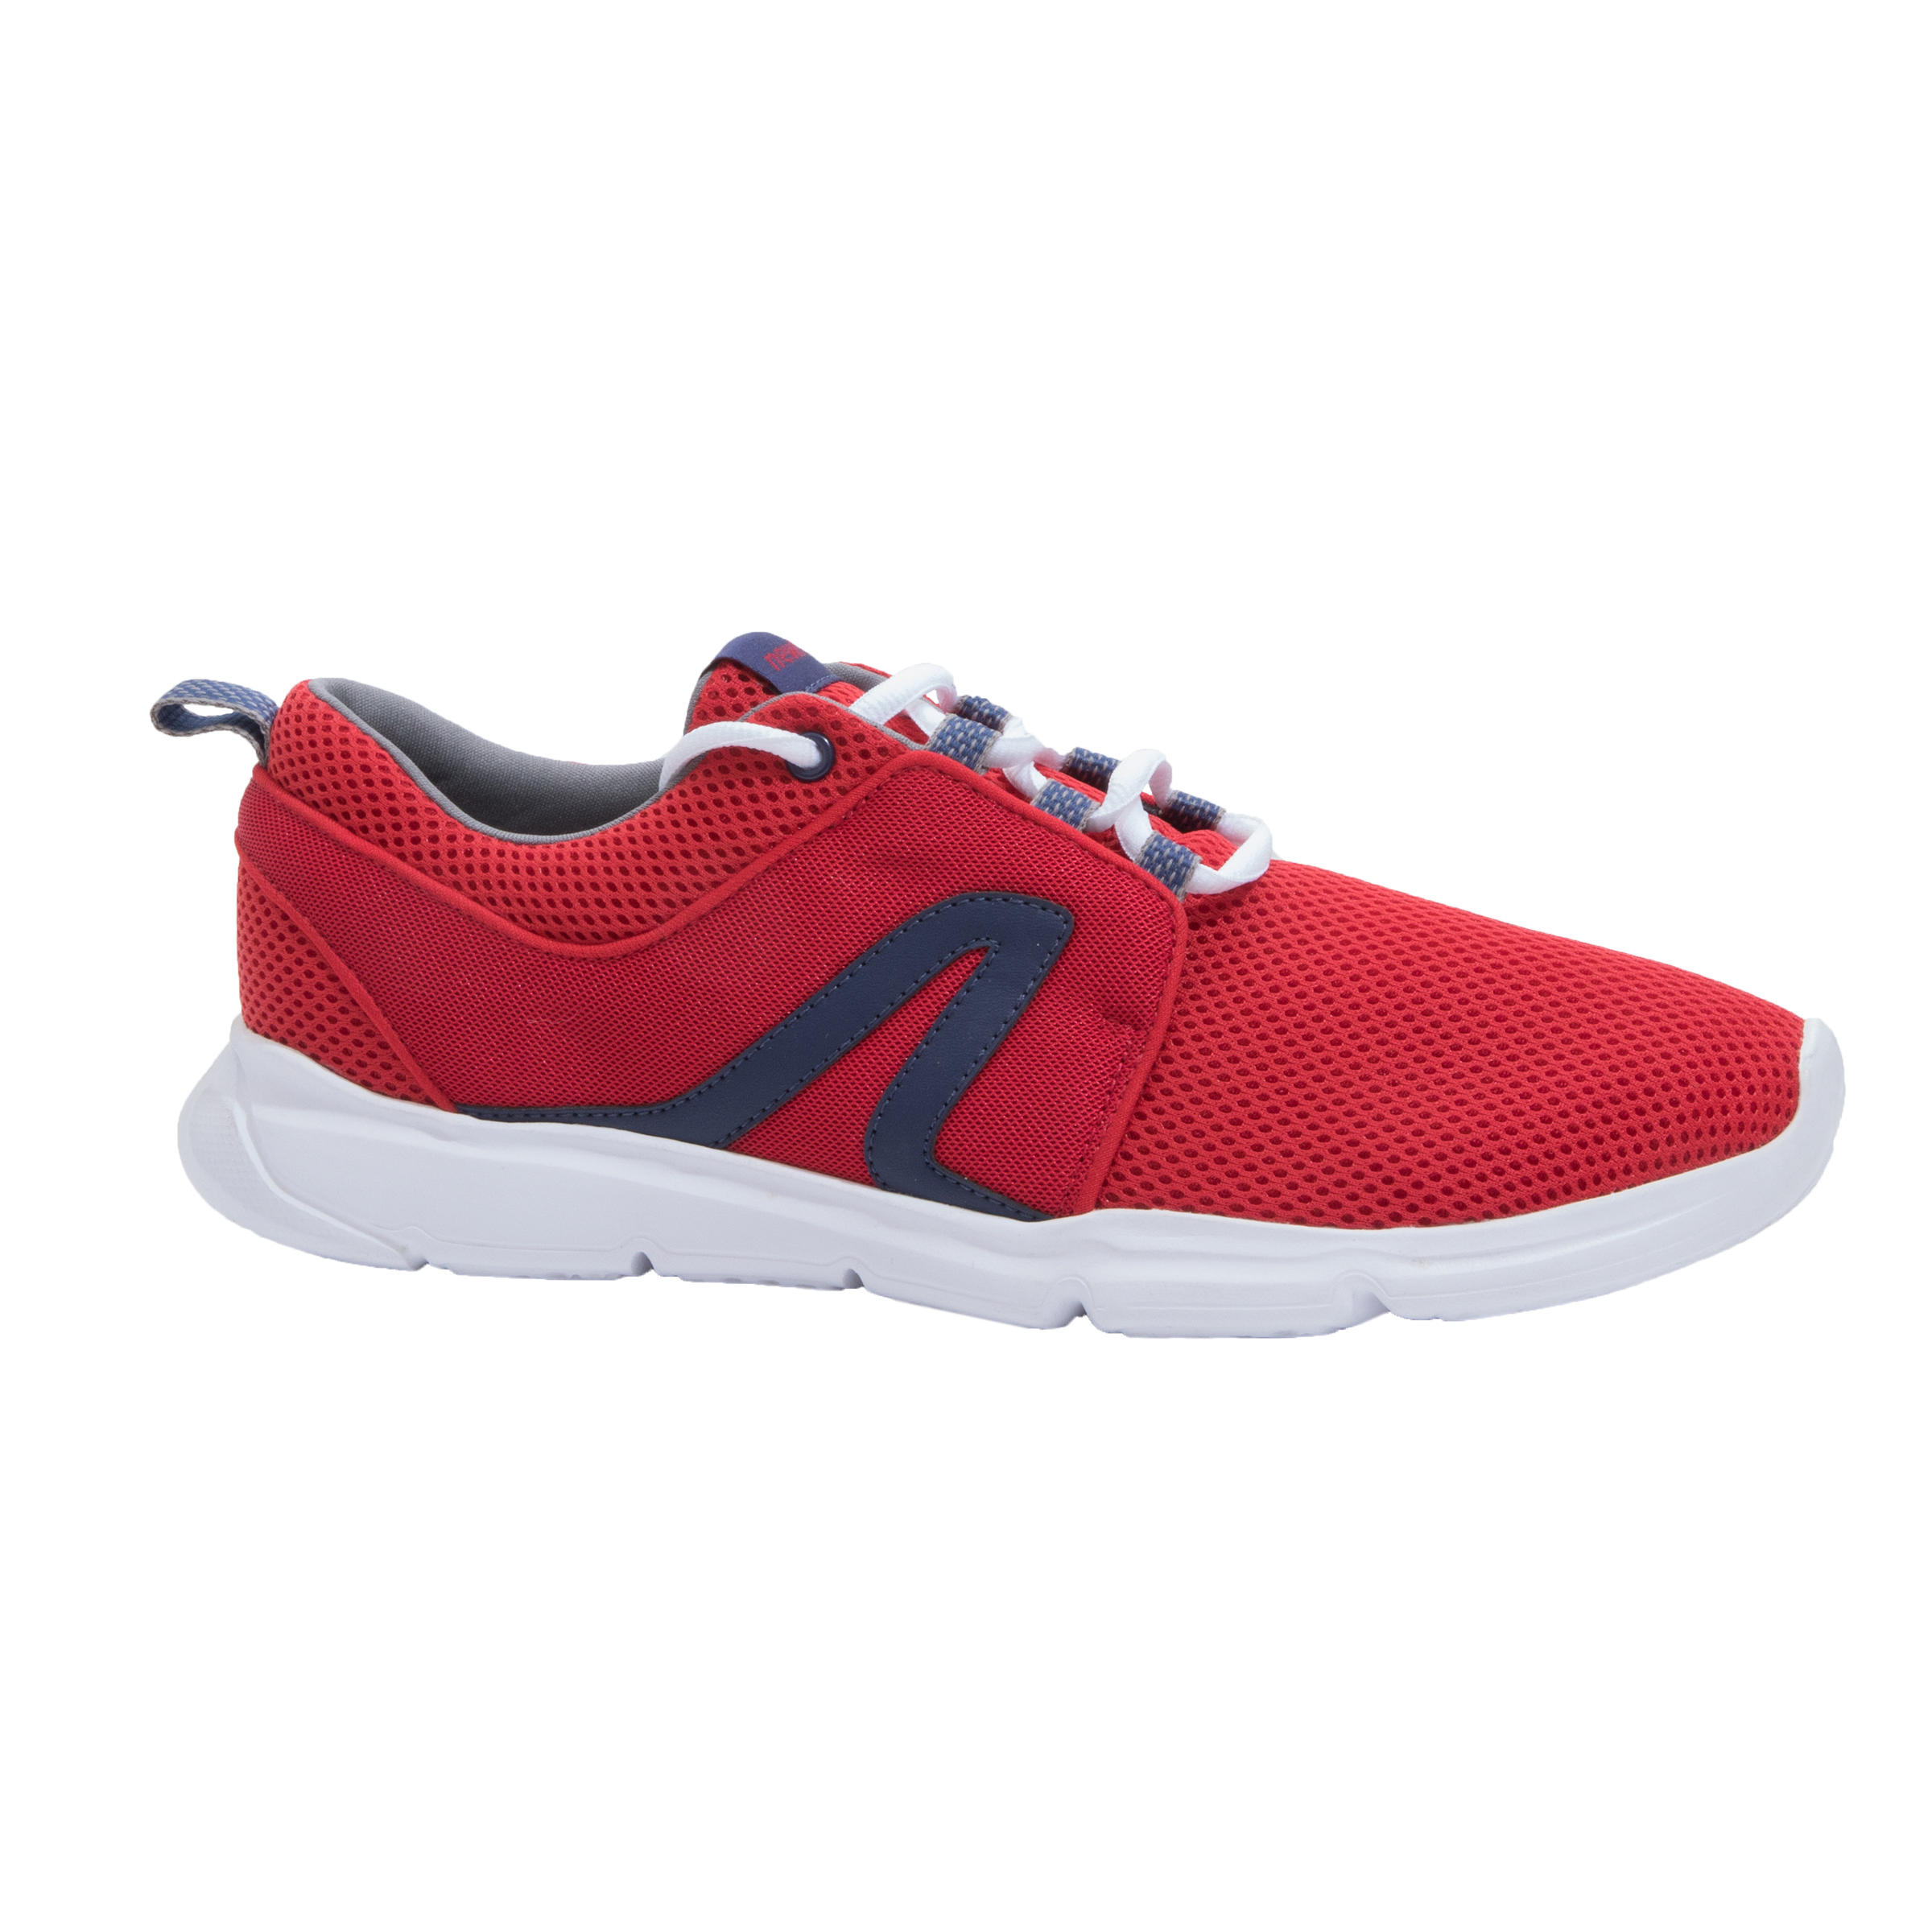 Buy Pw 120 Walking Shoes For Men Red Online | Decathlon